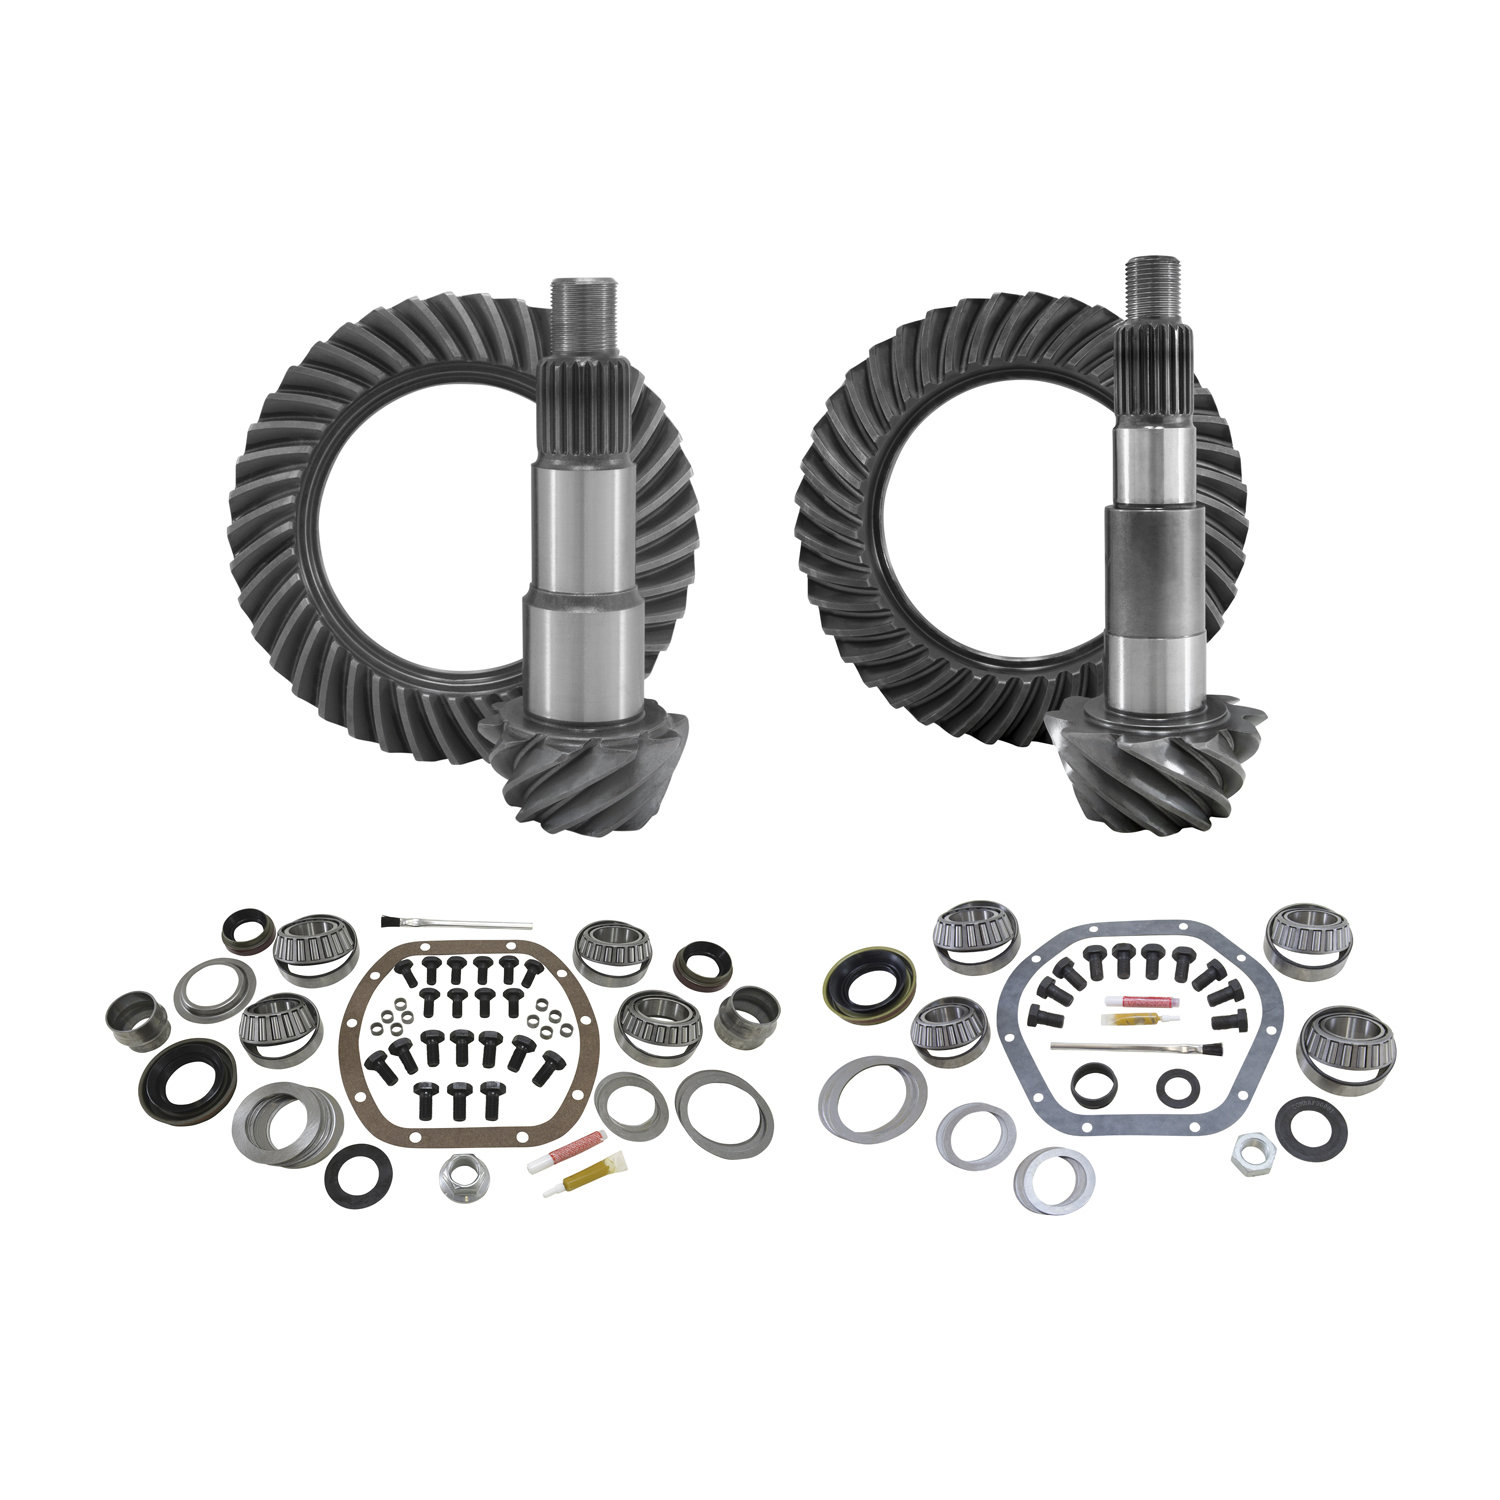 Yukon Gear & Axle Front & Rear Ring and Pinion with Master Install Kits for Jeep  Wrangler JK with Dana 30 Front / Dana 44 Rear | Quadratec